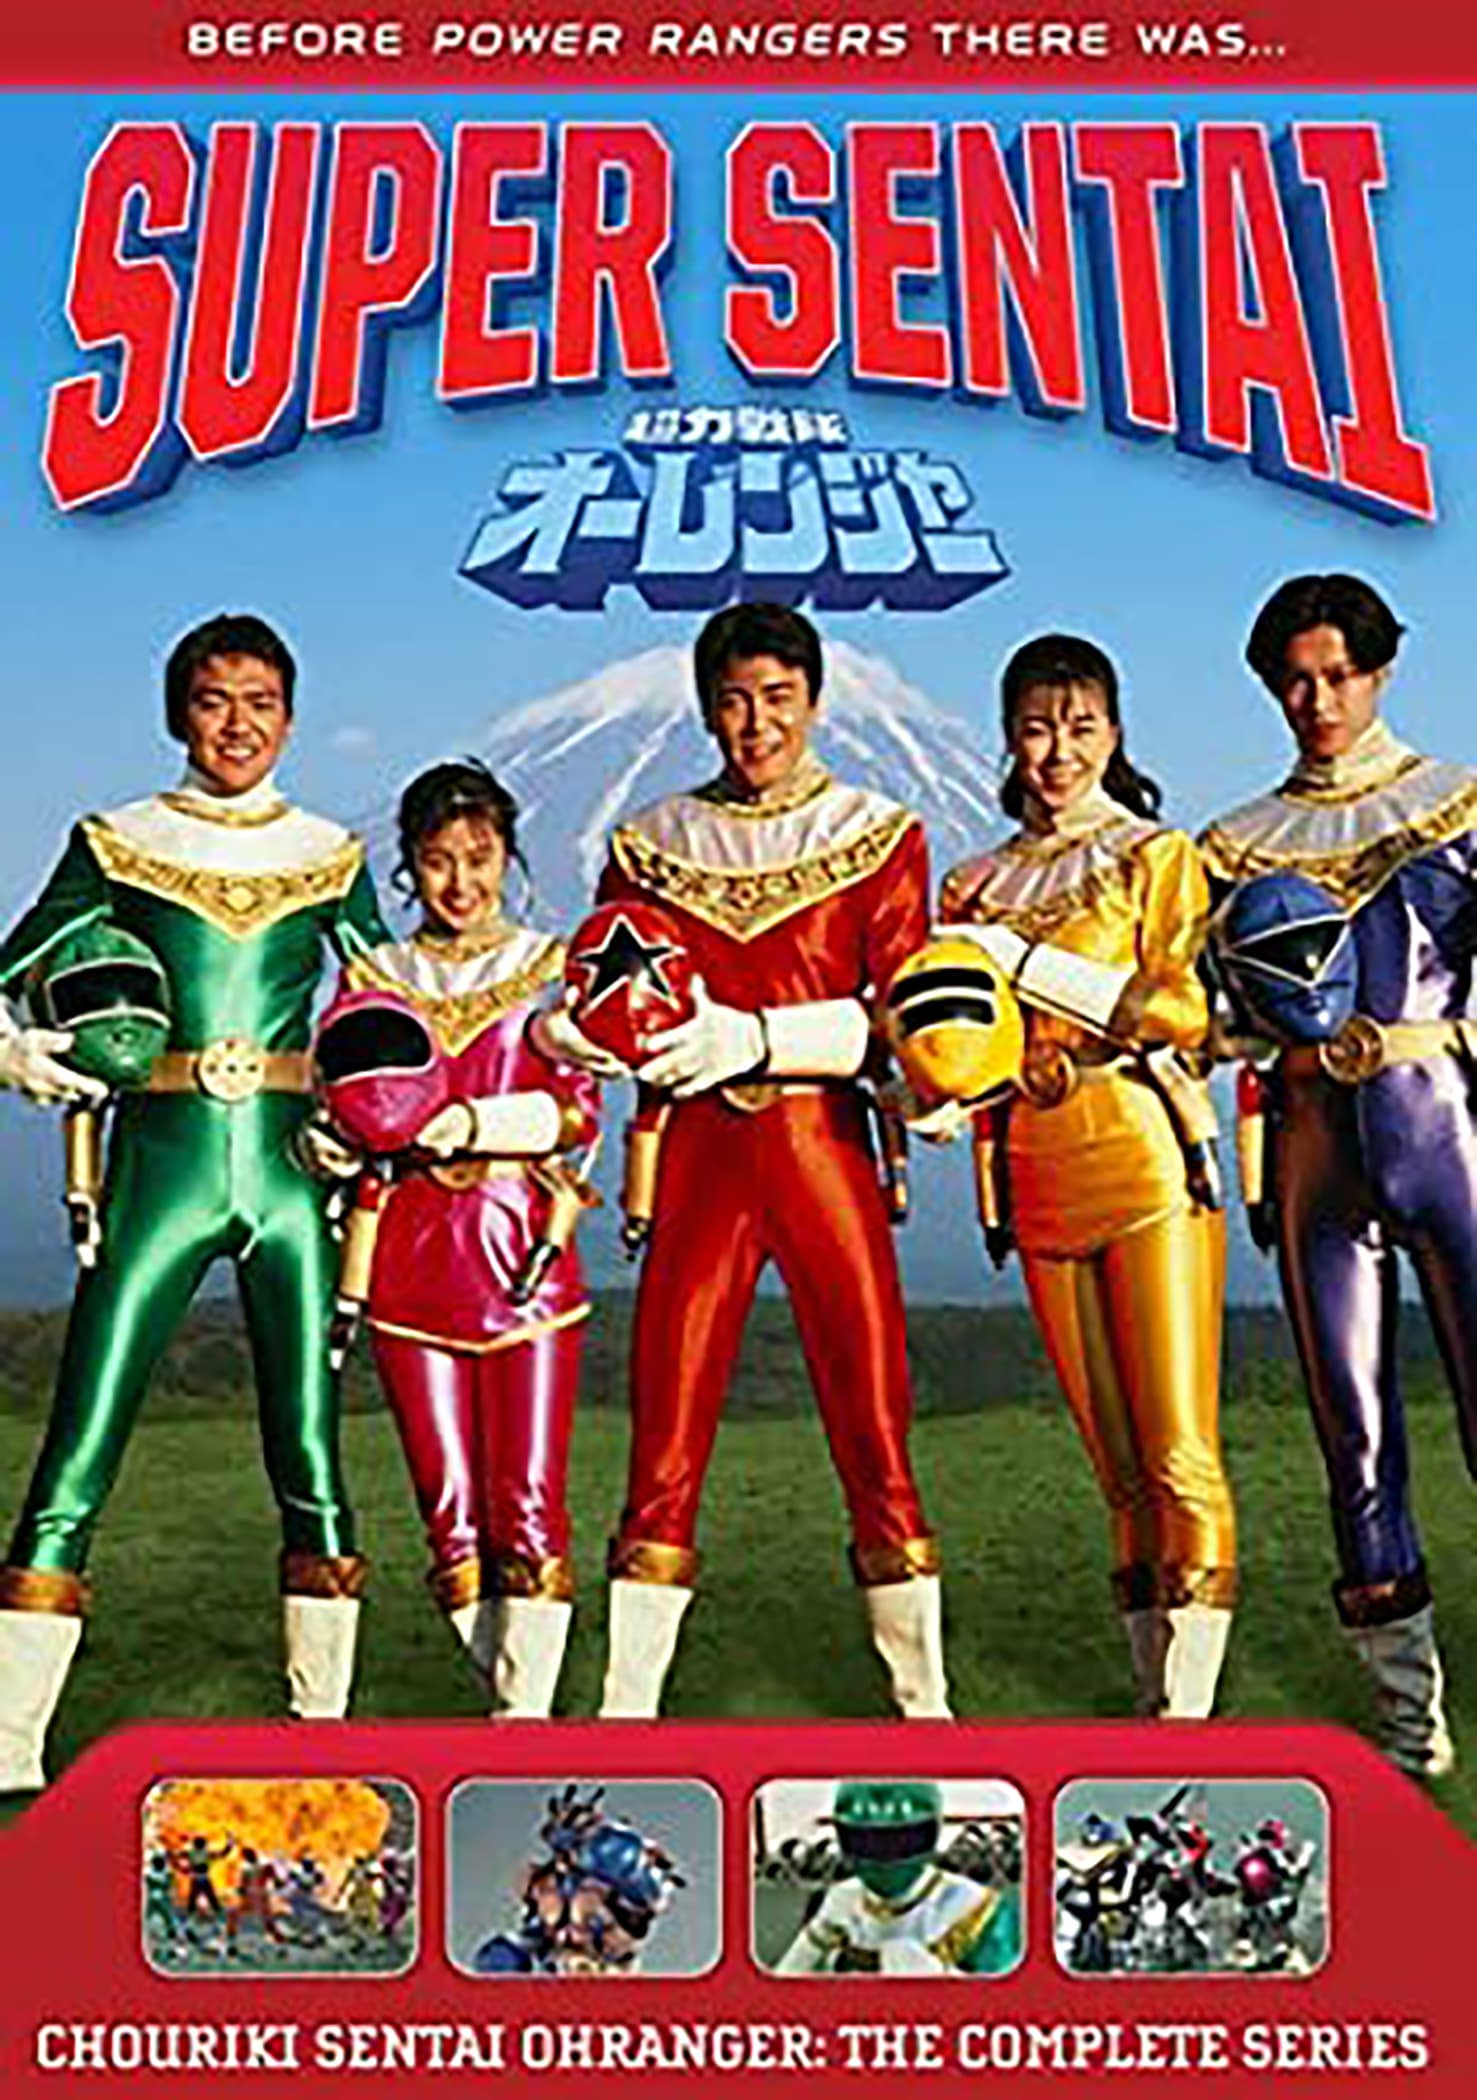 Chouriki Sentai Ohranger (1995)